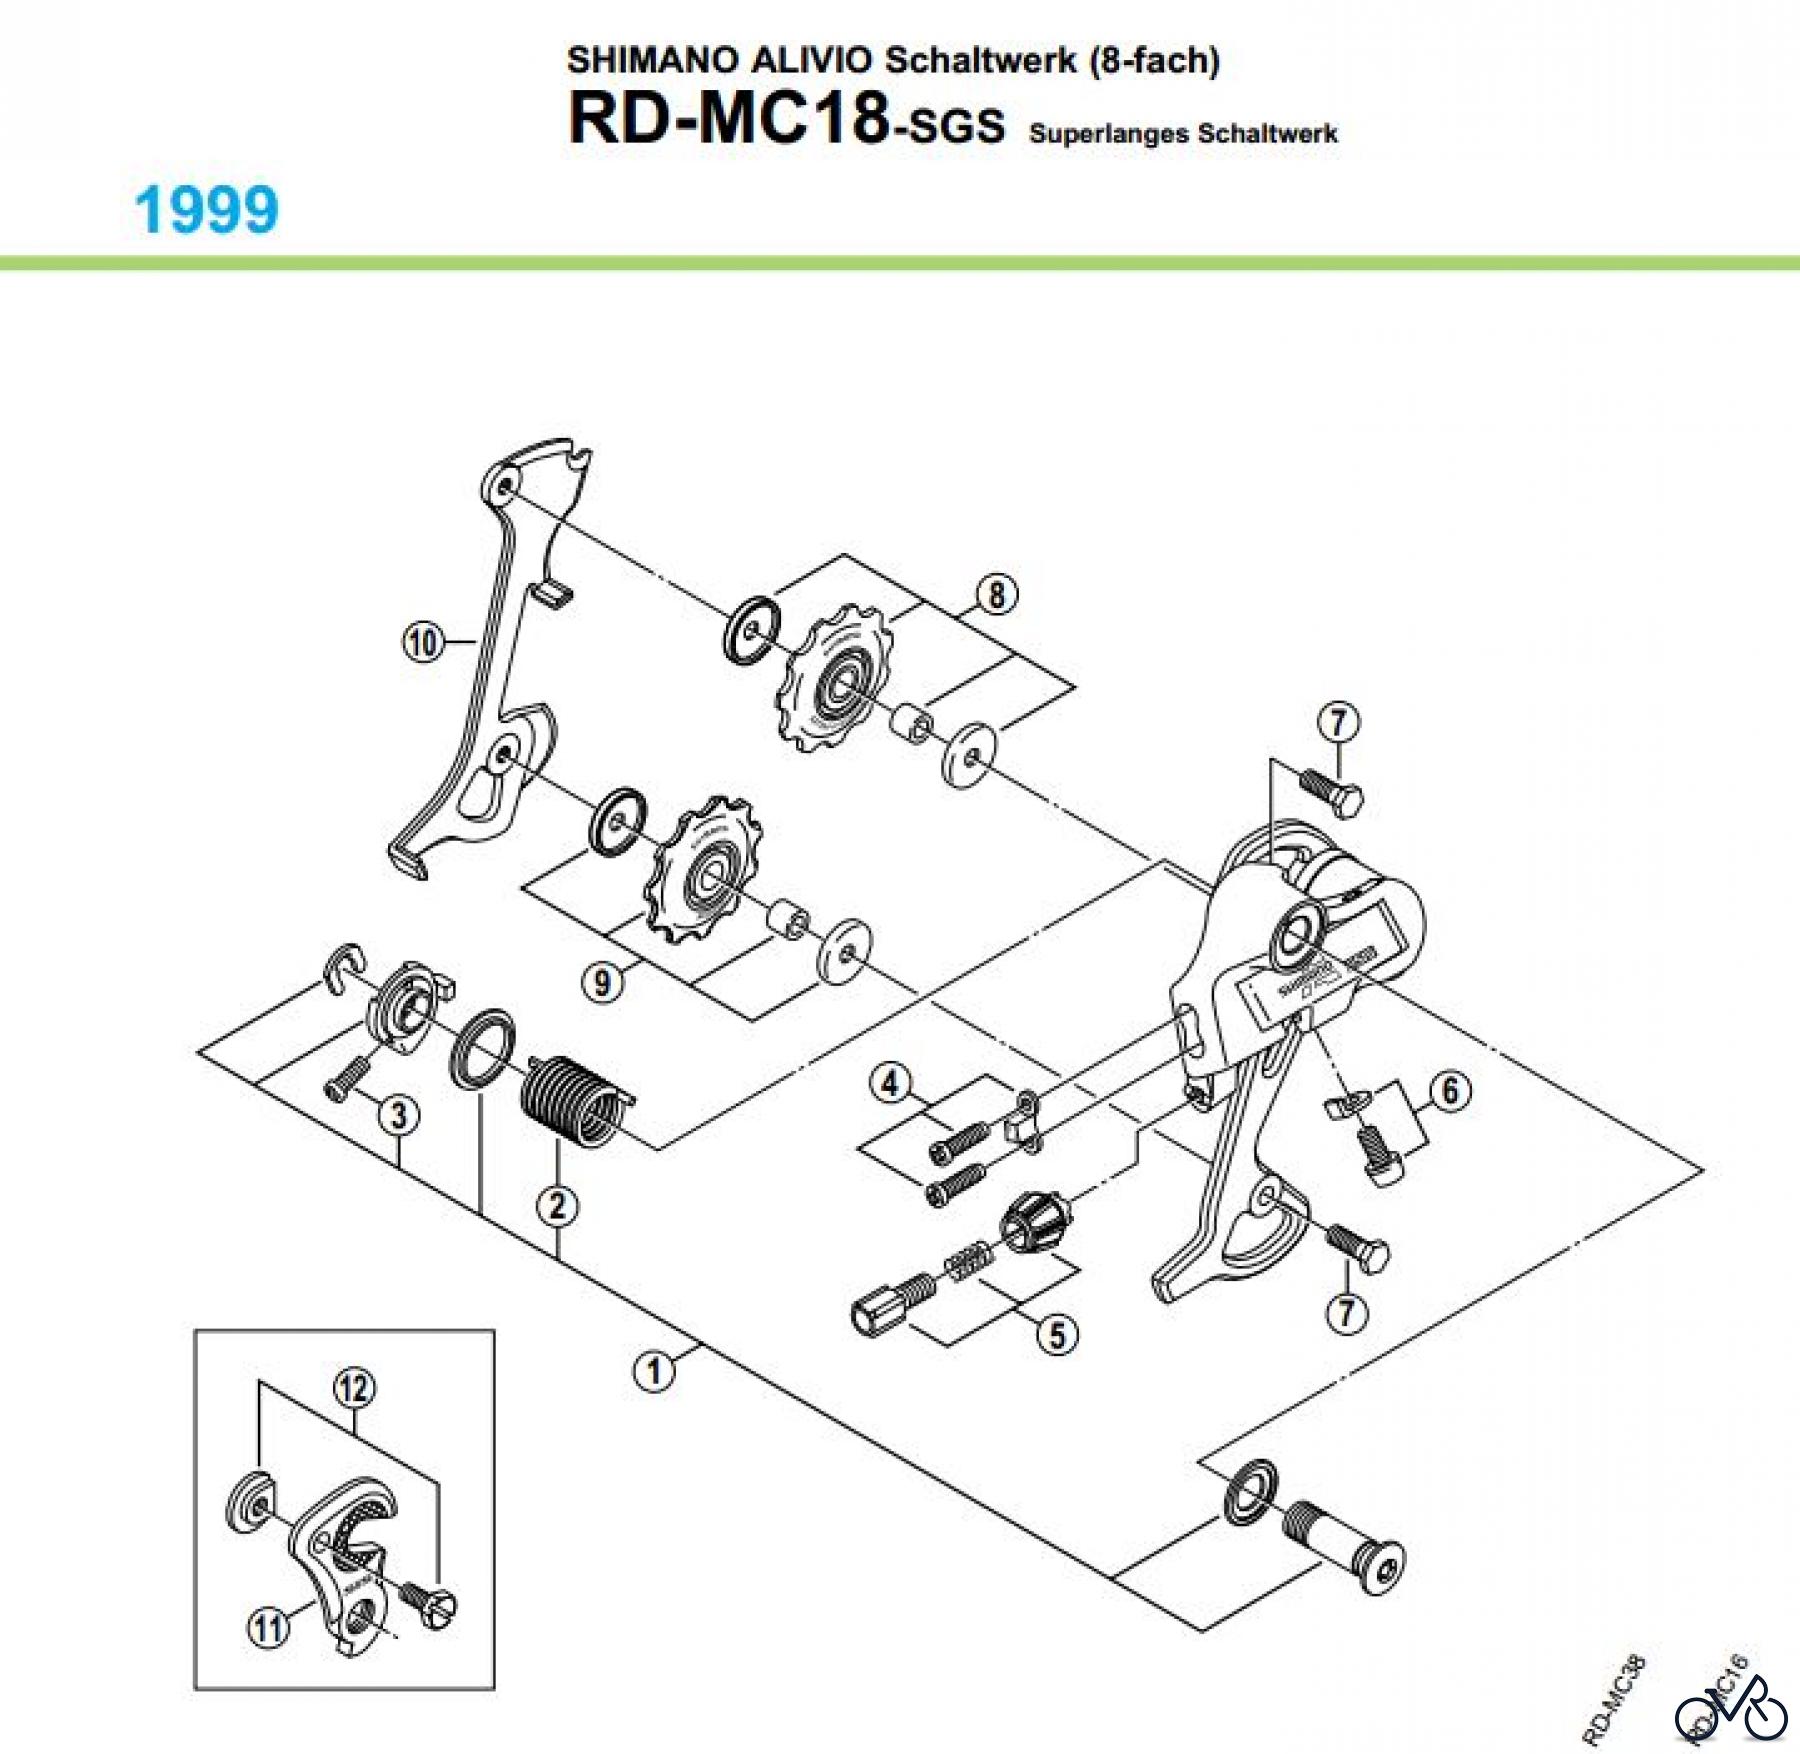  Shimano RD Rear Derailleur - Schaltwerk RD-MC18-99